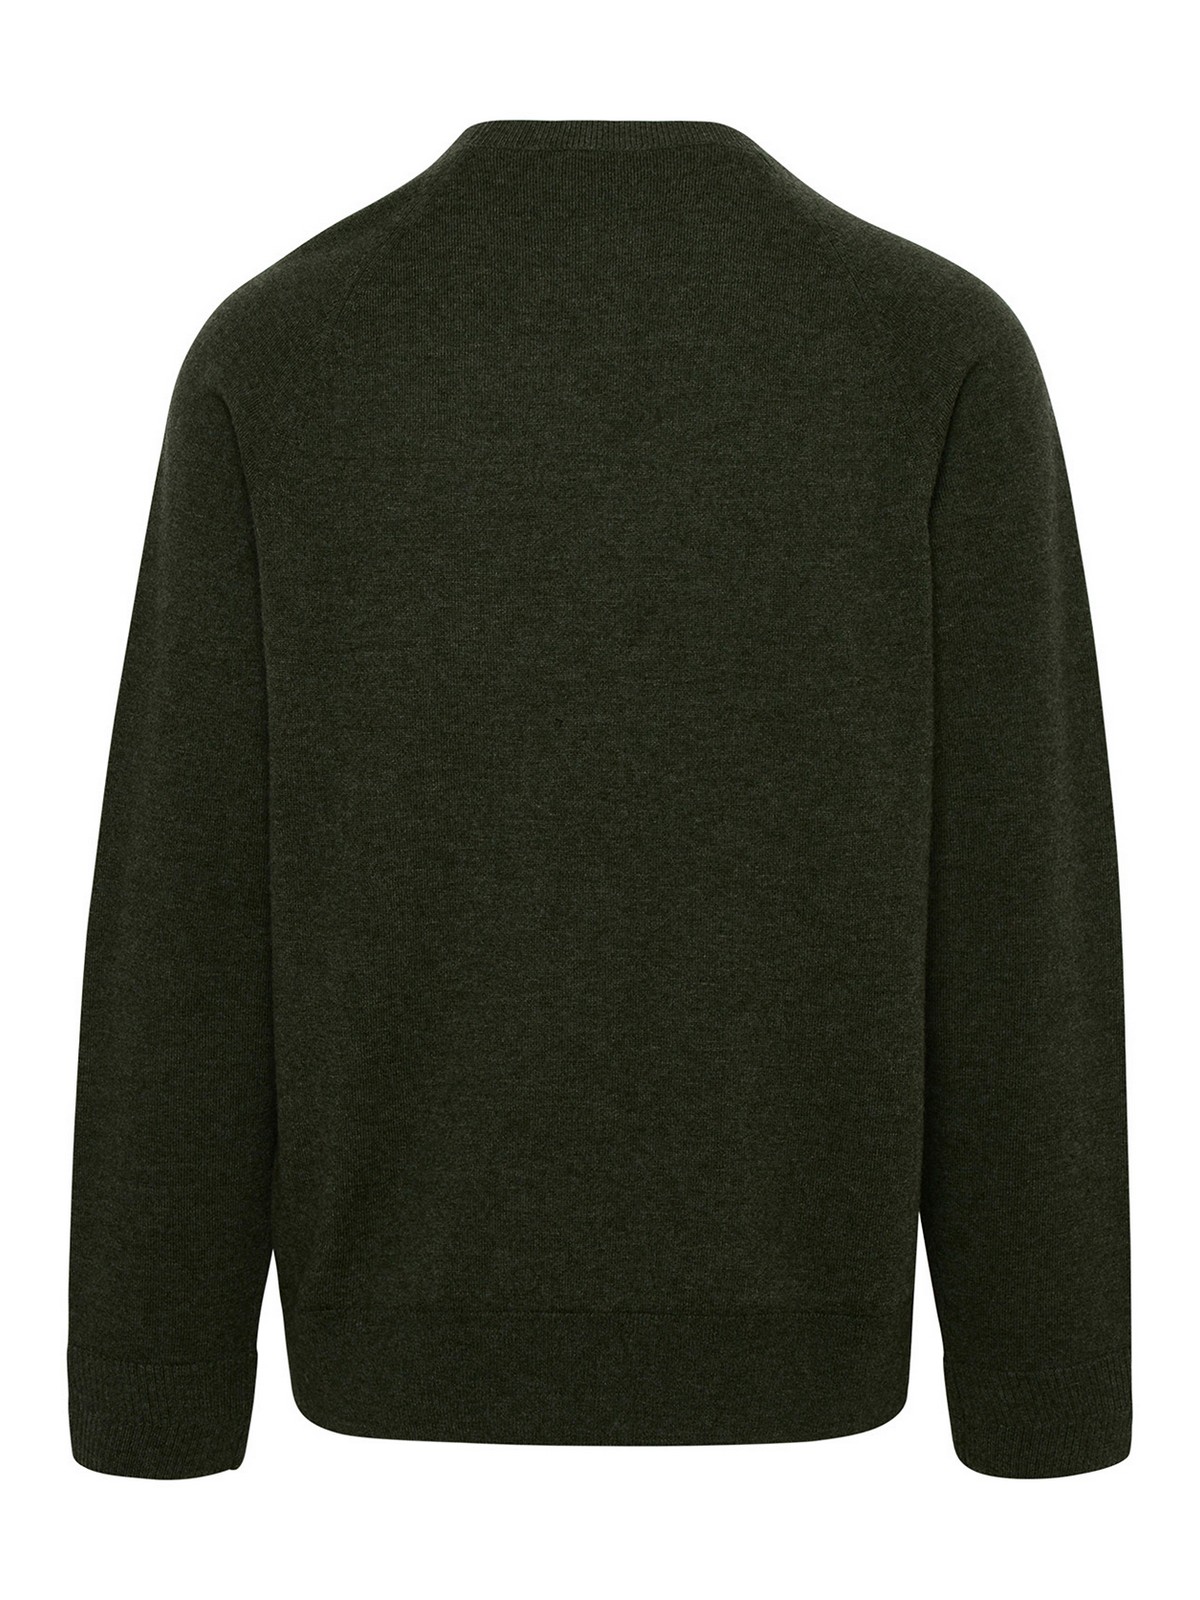 Shop Apc Elie Sweater In Green Virgin Wool